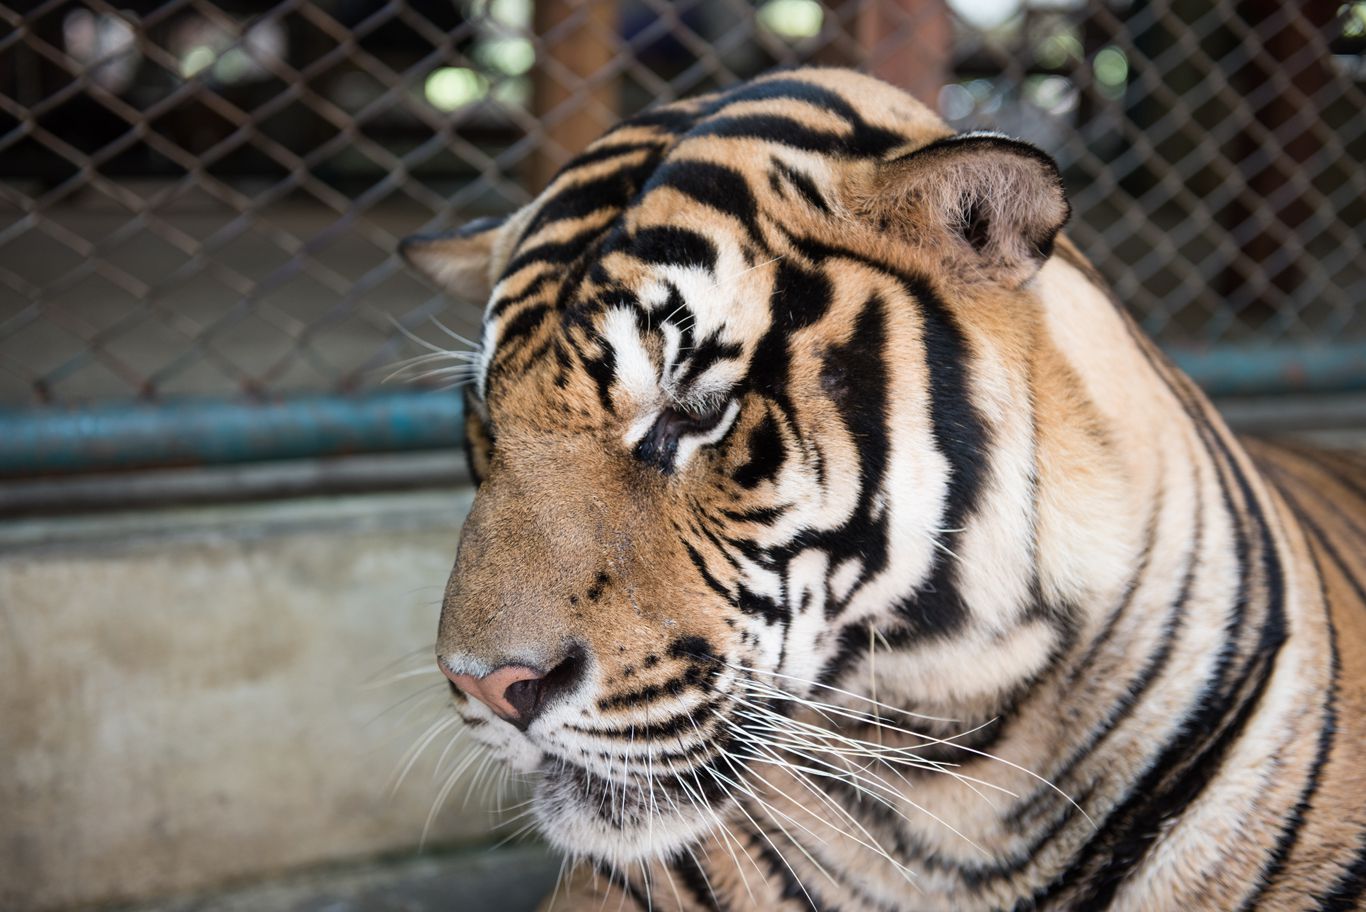 Watching Tigers in Tiger Kingdom